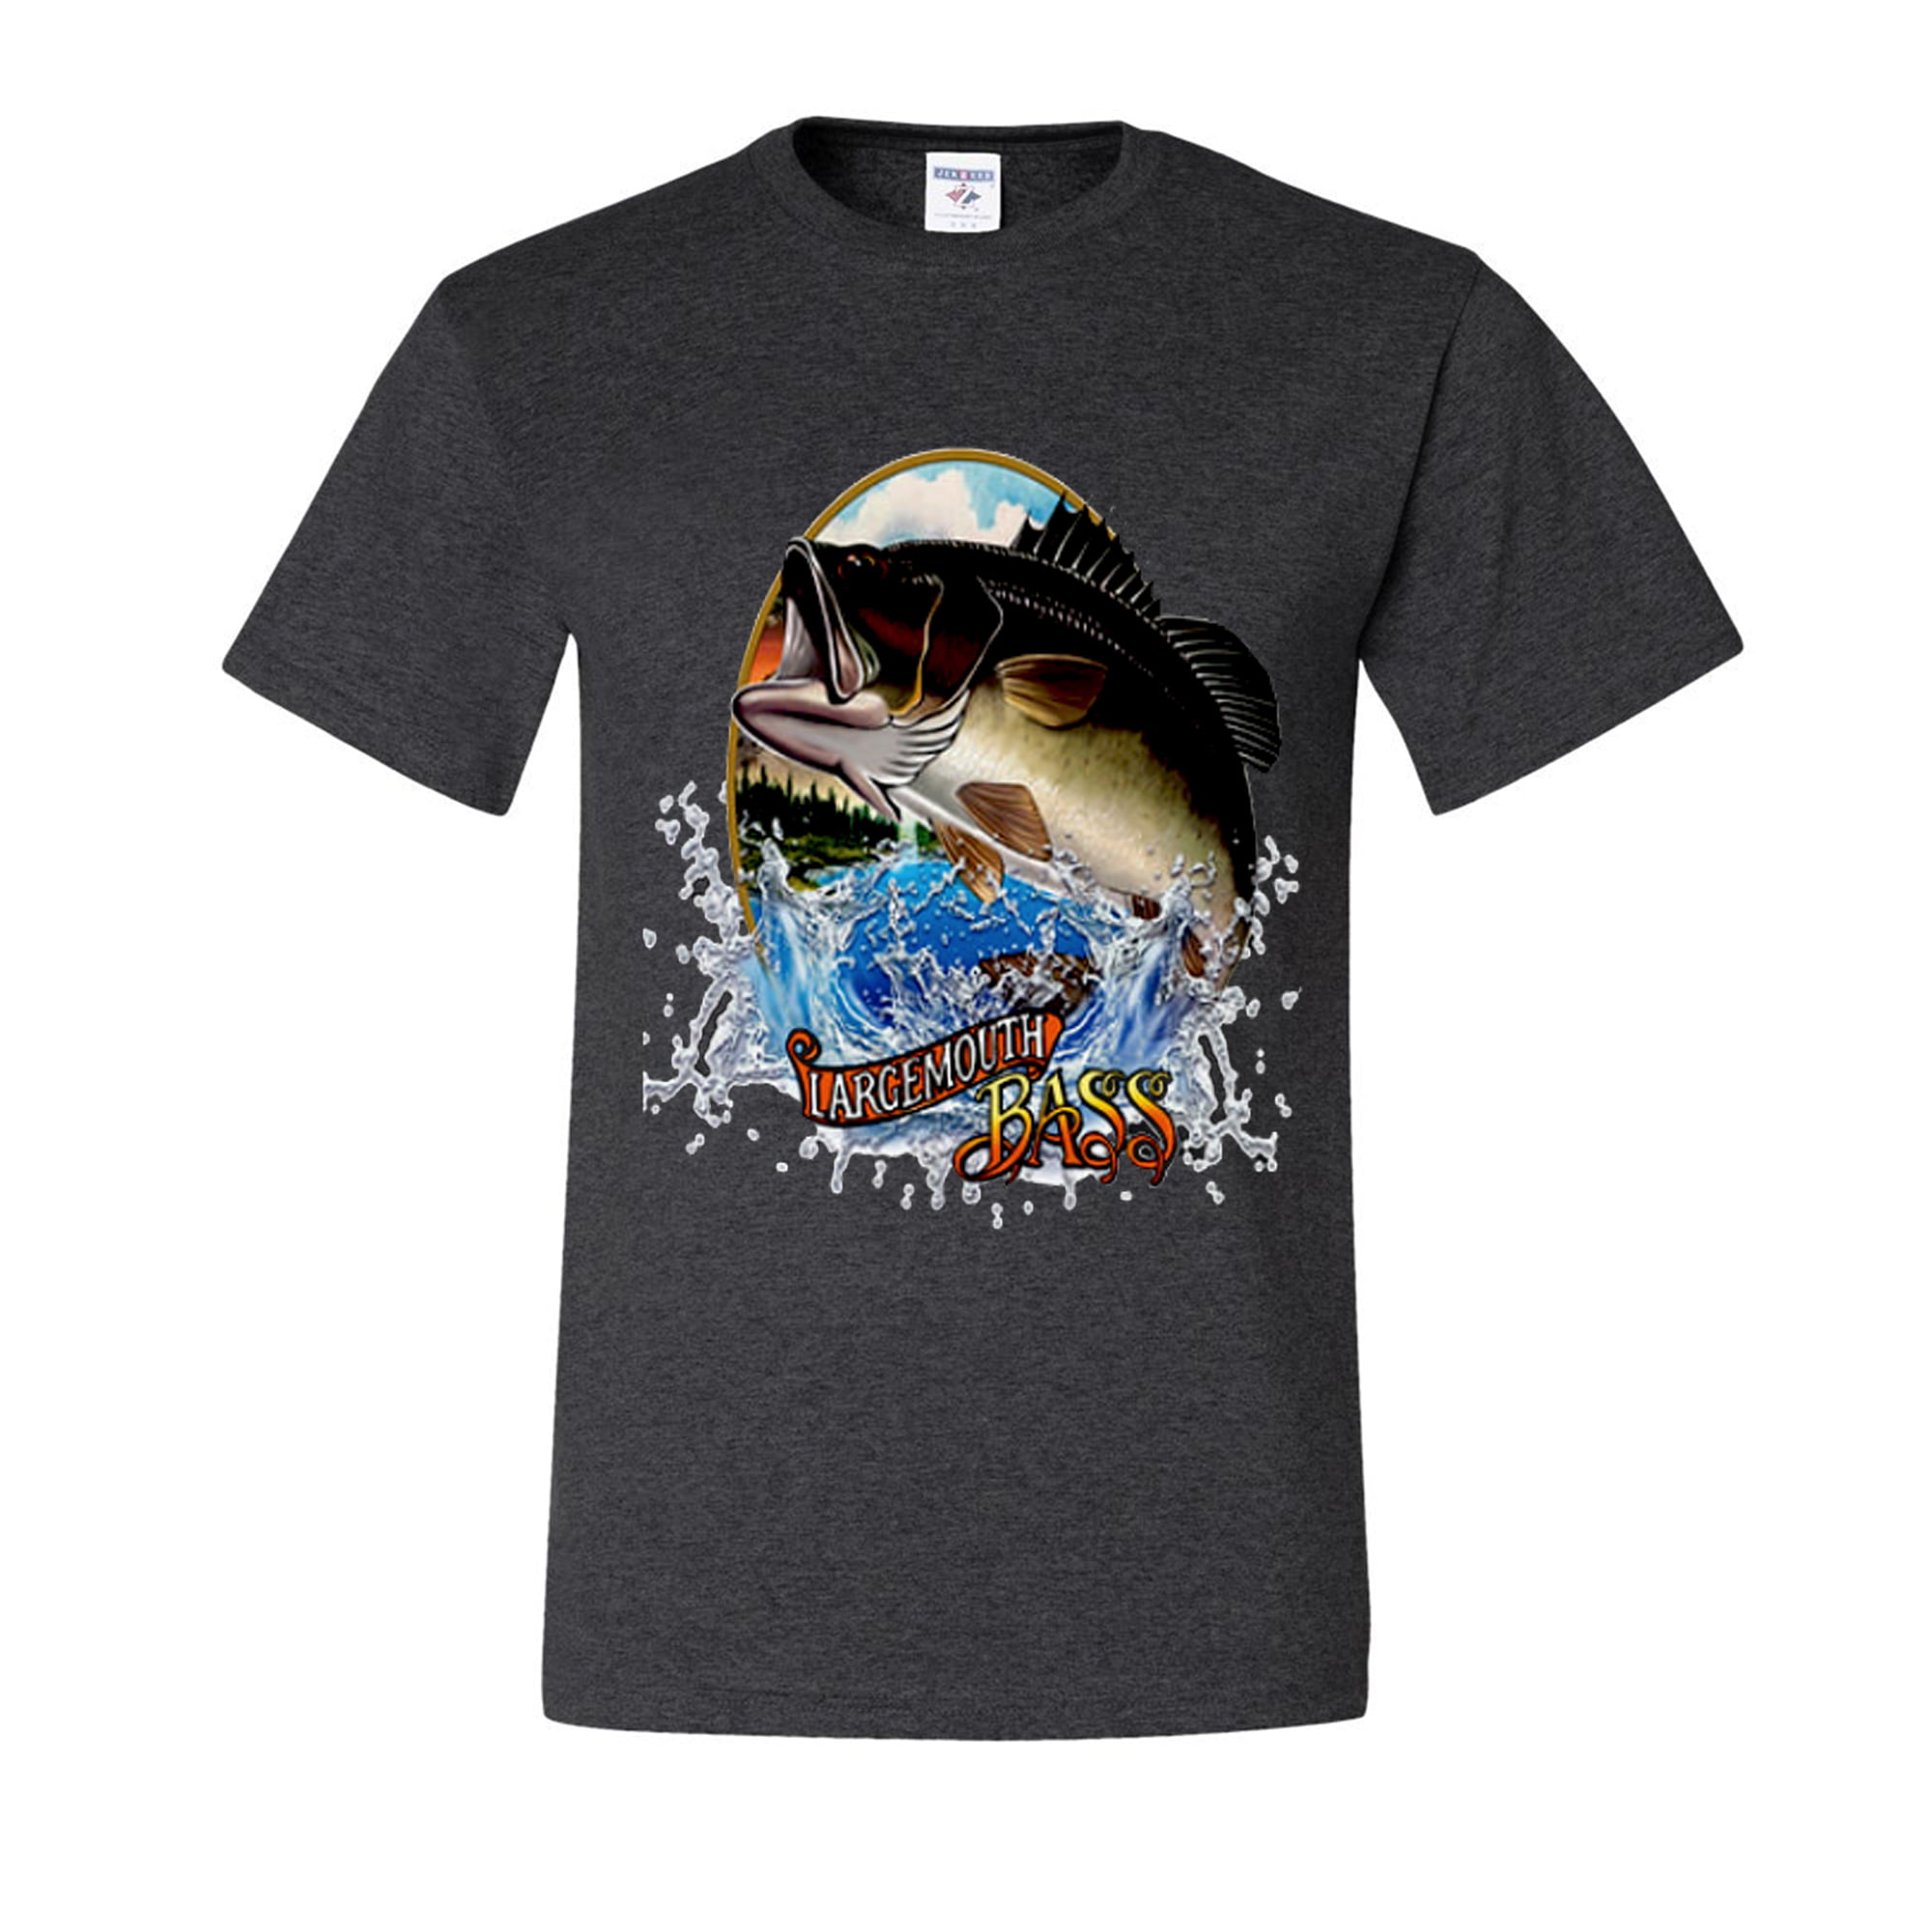 Wild Custom Apparel Largemouth Bass Fish Fishling Lovers Mens T-shirts , Navy Blue, Large, adult unisex